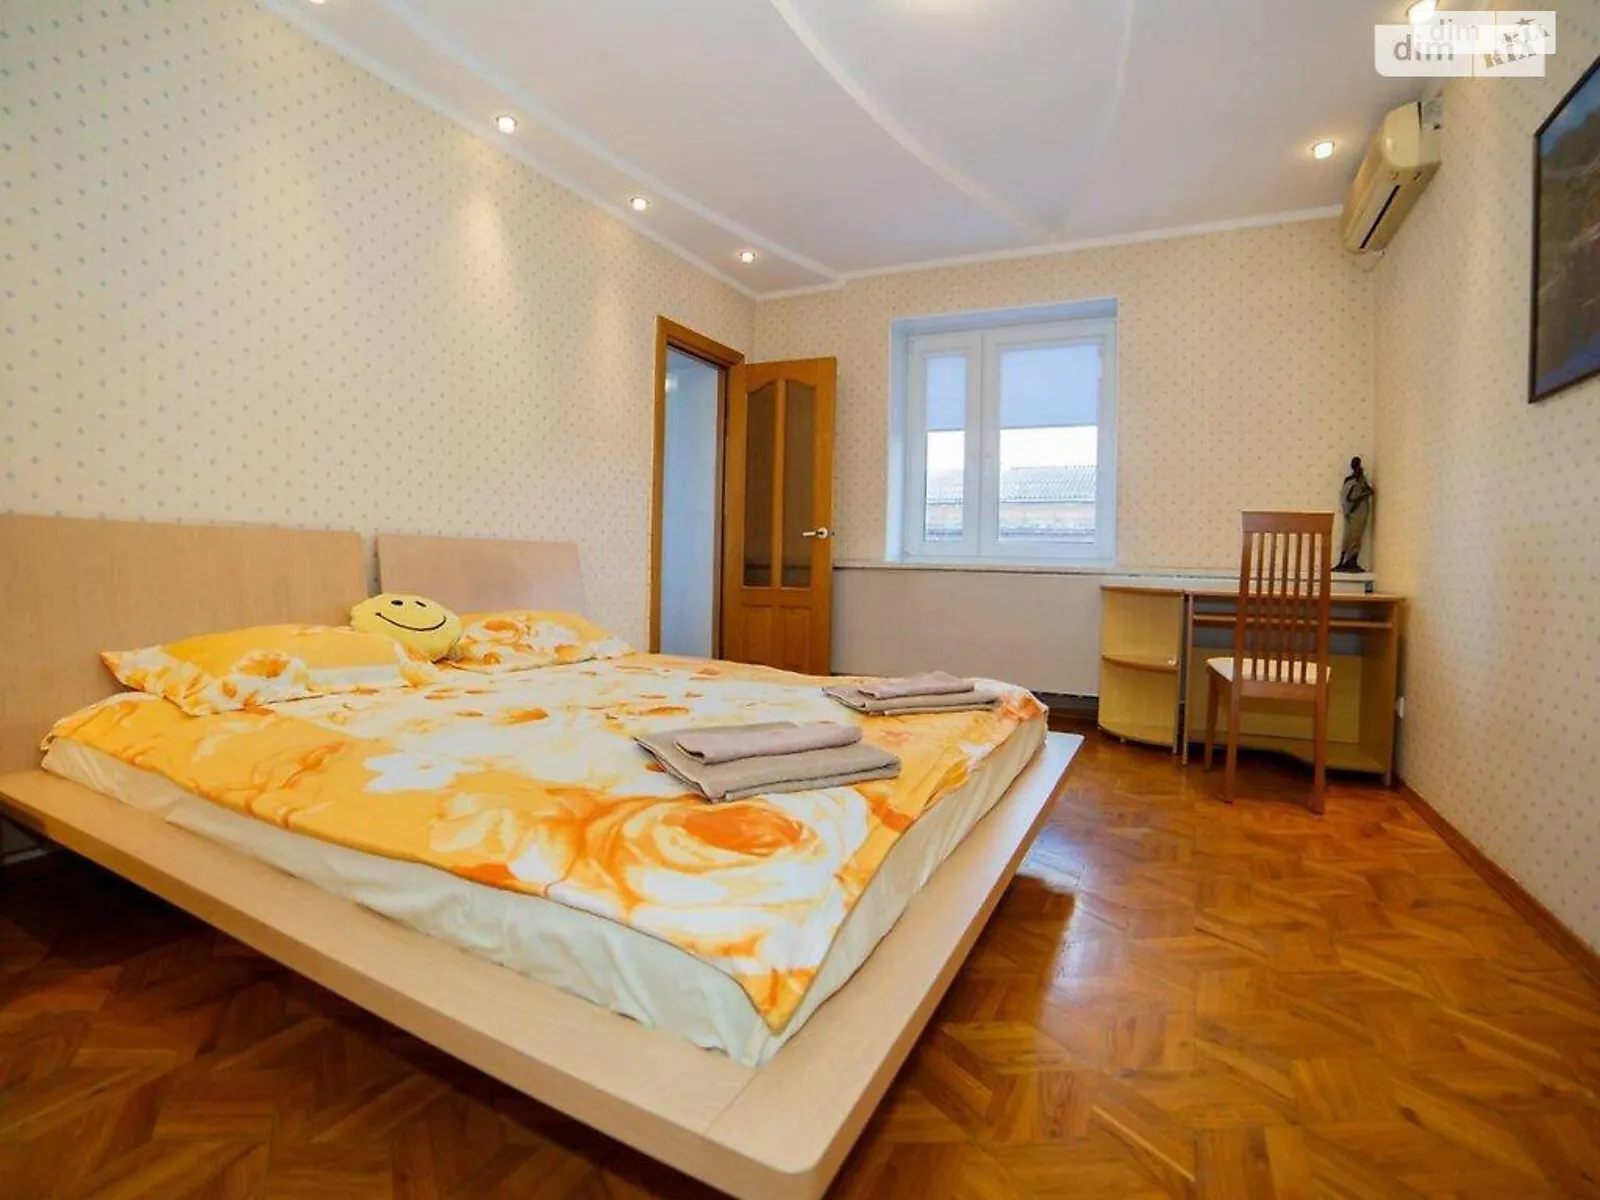 Продается 3-комнатная квартира 119.7 кв. м в Полтаве, ул. Ватутина - фото 1